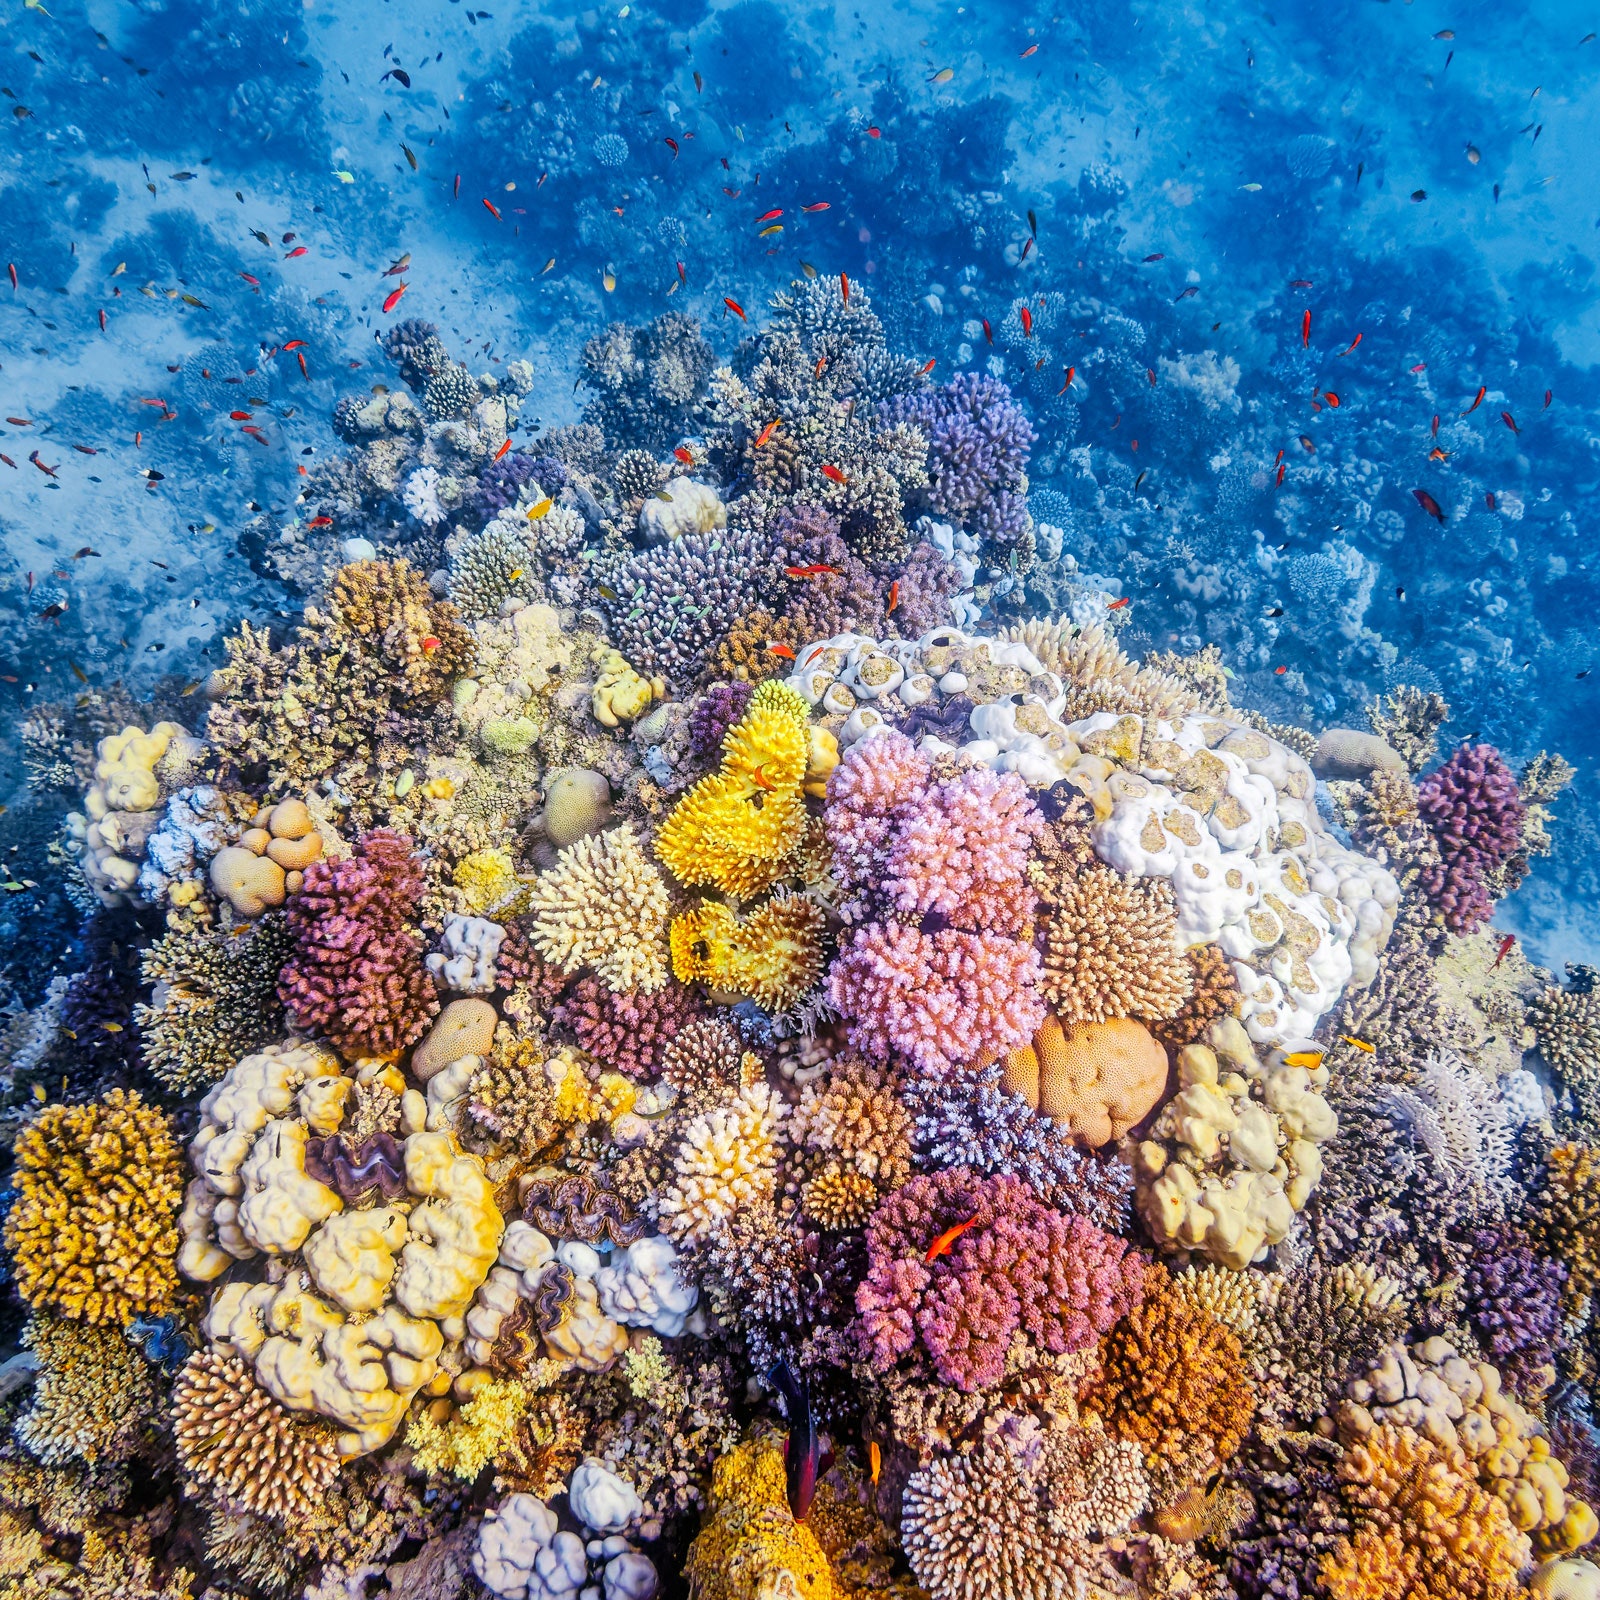 Spiritual Biblical Meaning of Coral in a Dream